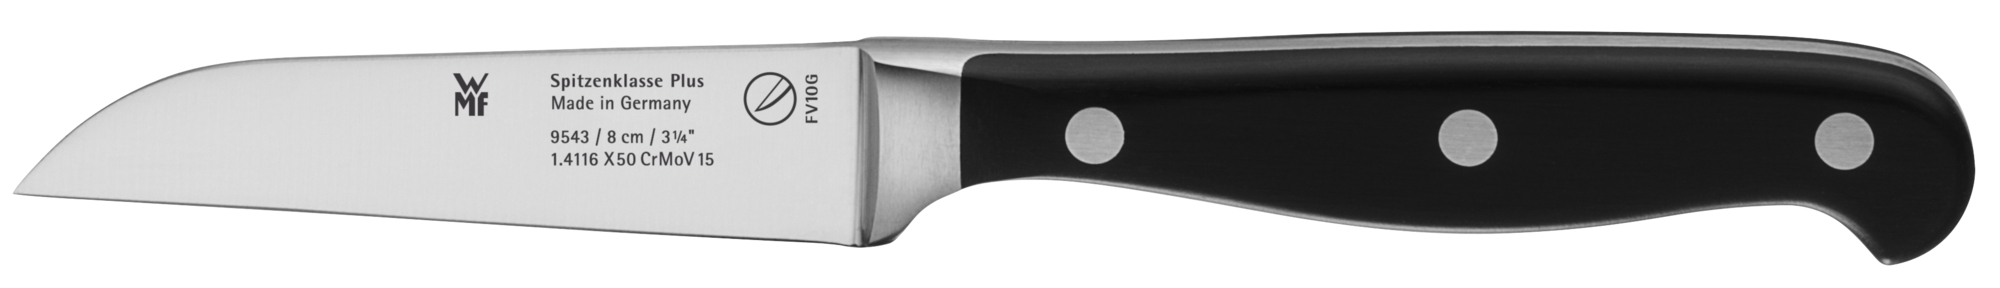 Овощной нож Spitzenklasse Plus 8 см общая тетрадь erichkrause